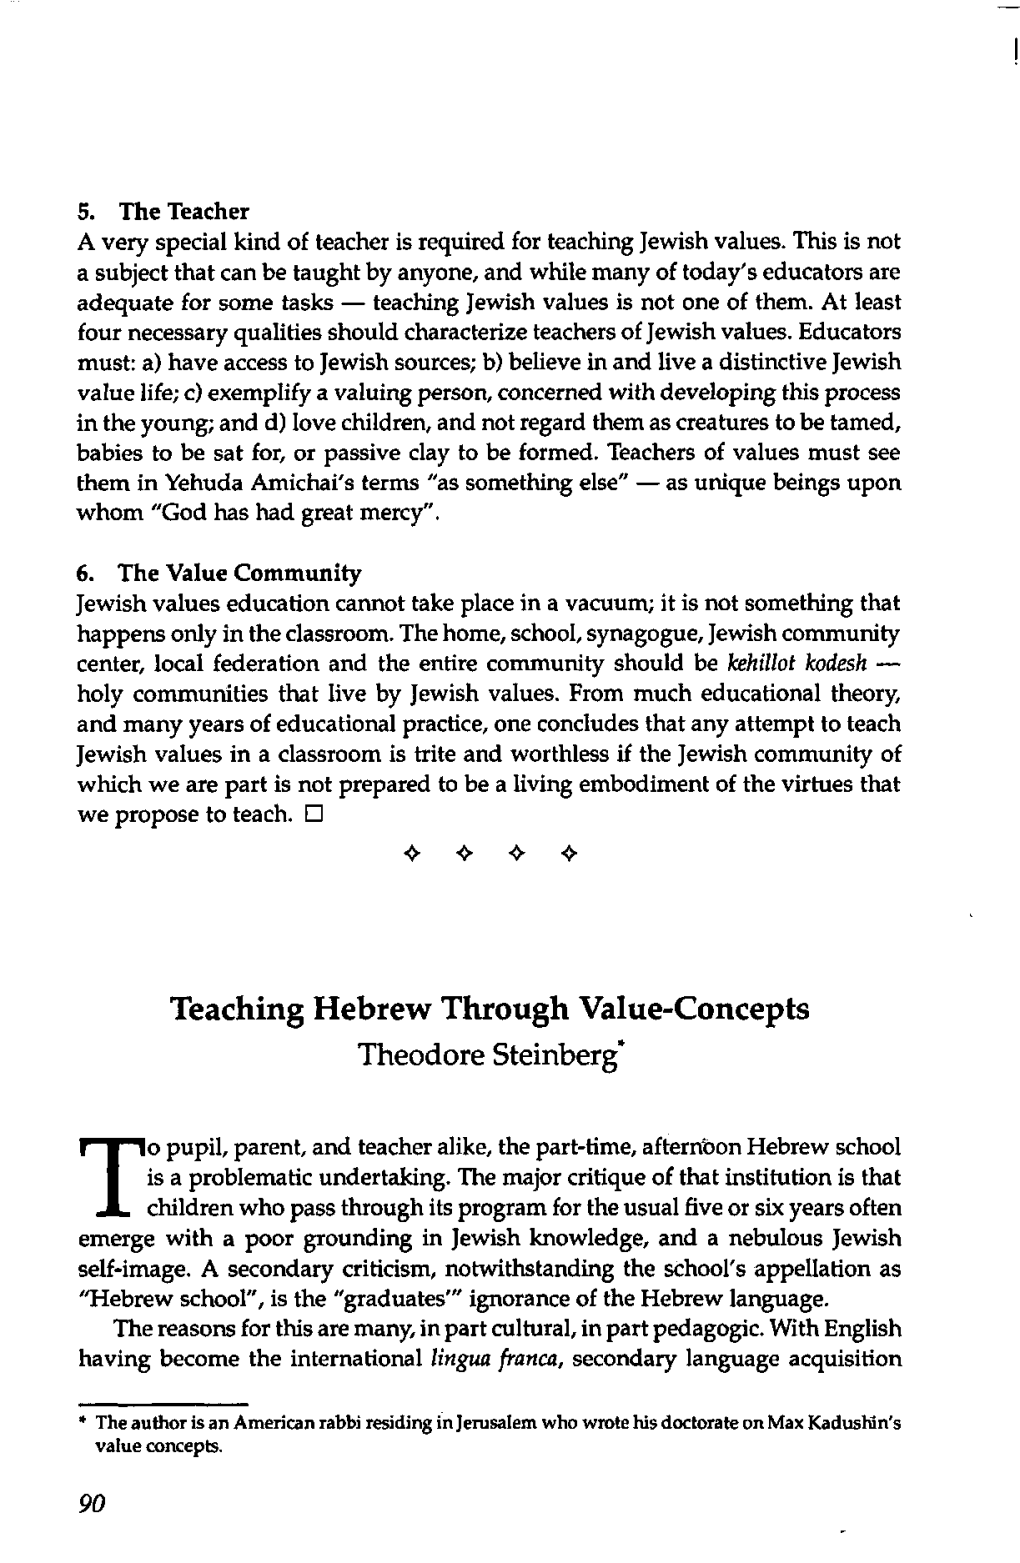 Teaching Hebrew Through Value-Concepts Theodore Steinberg*